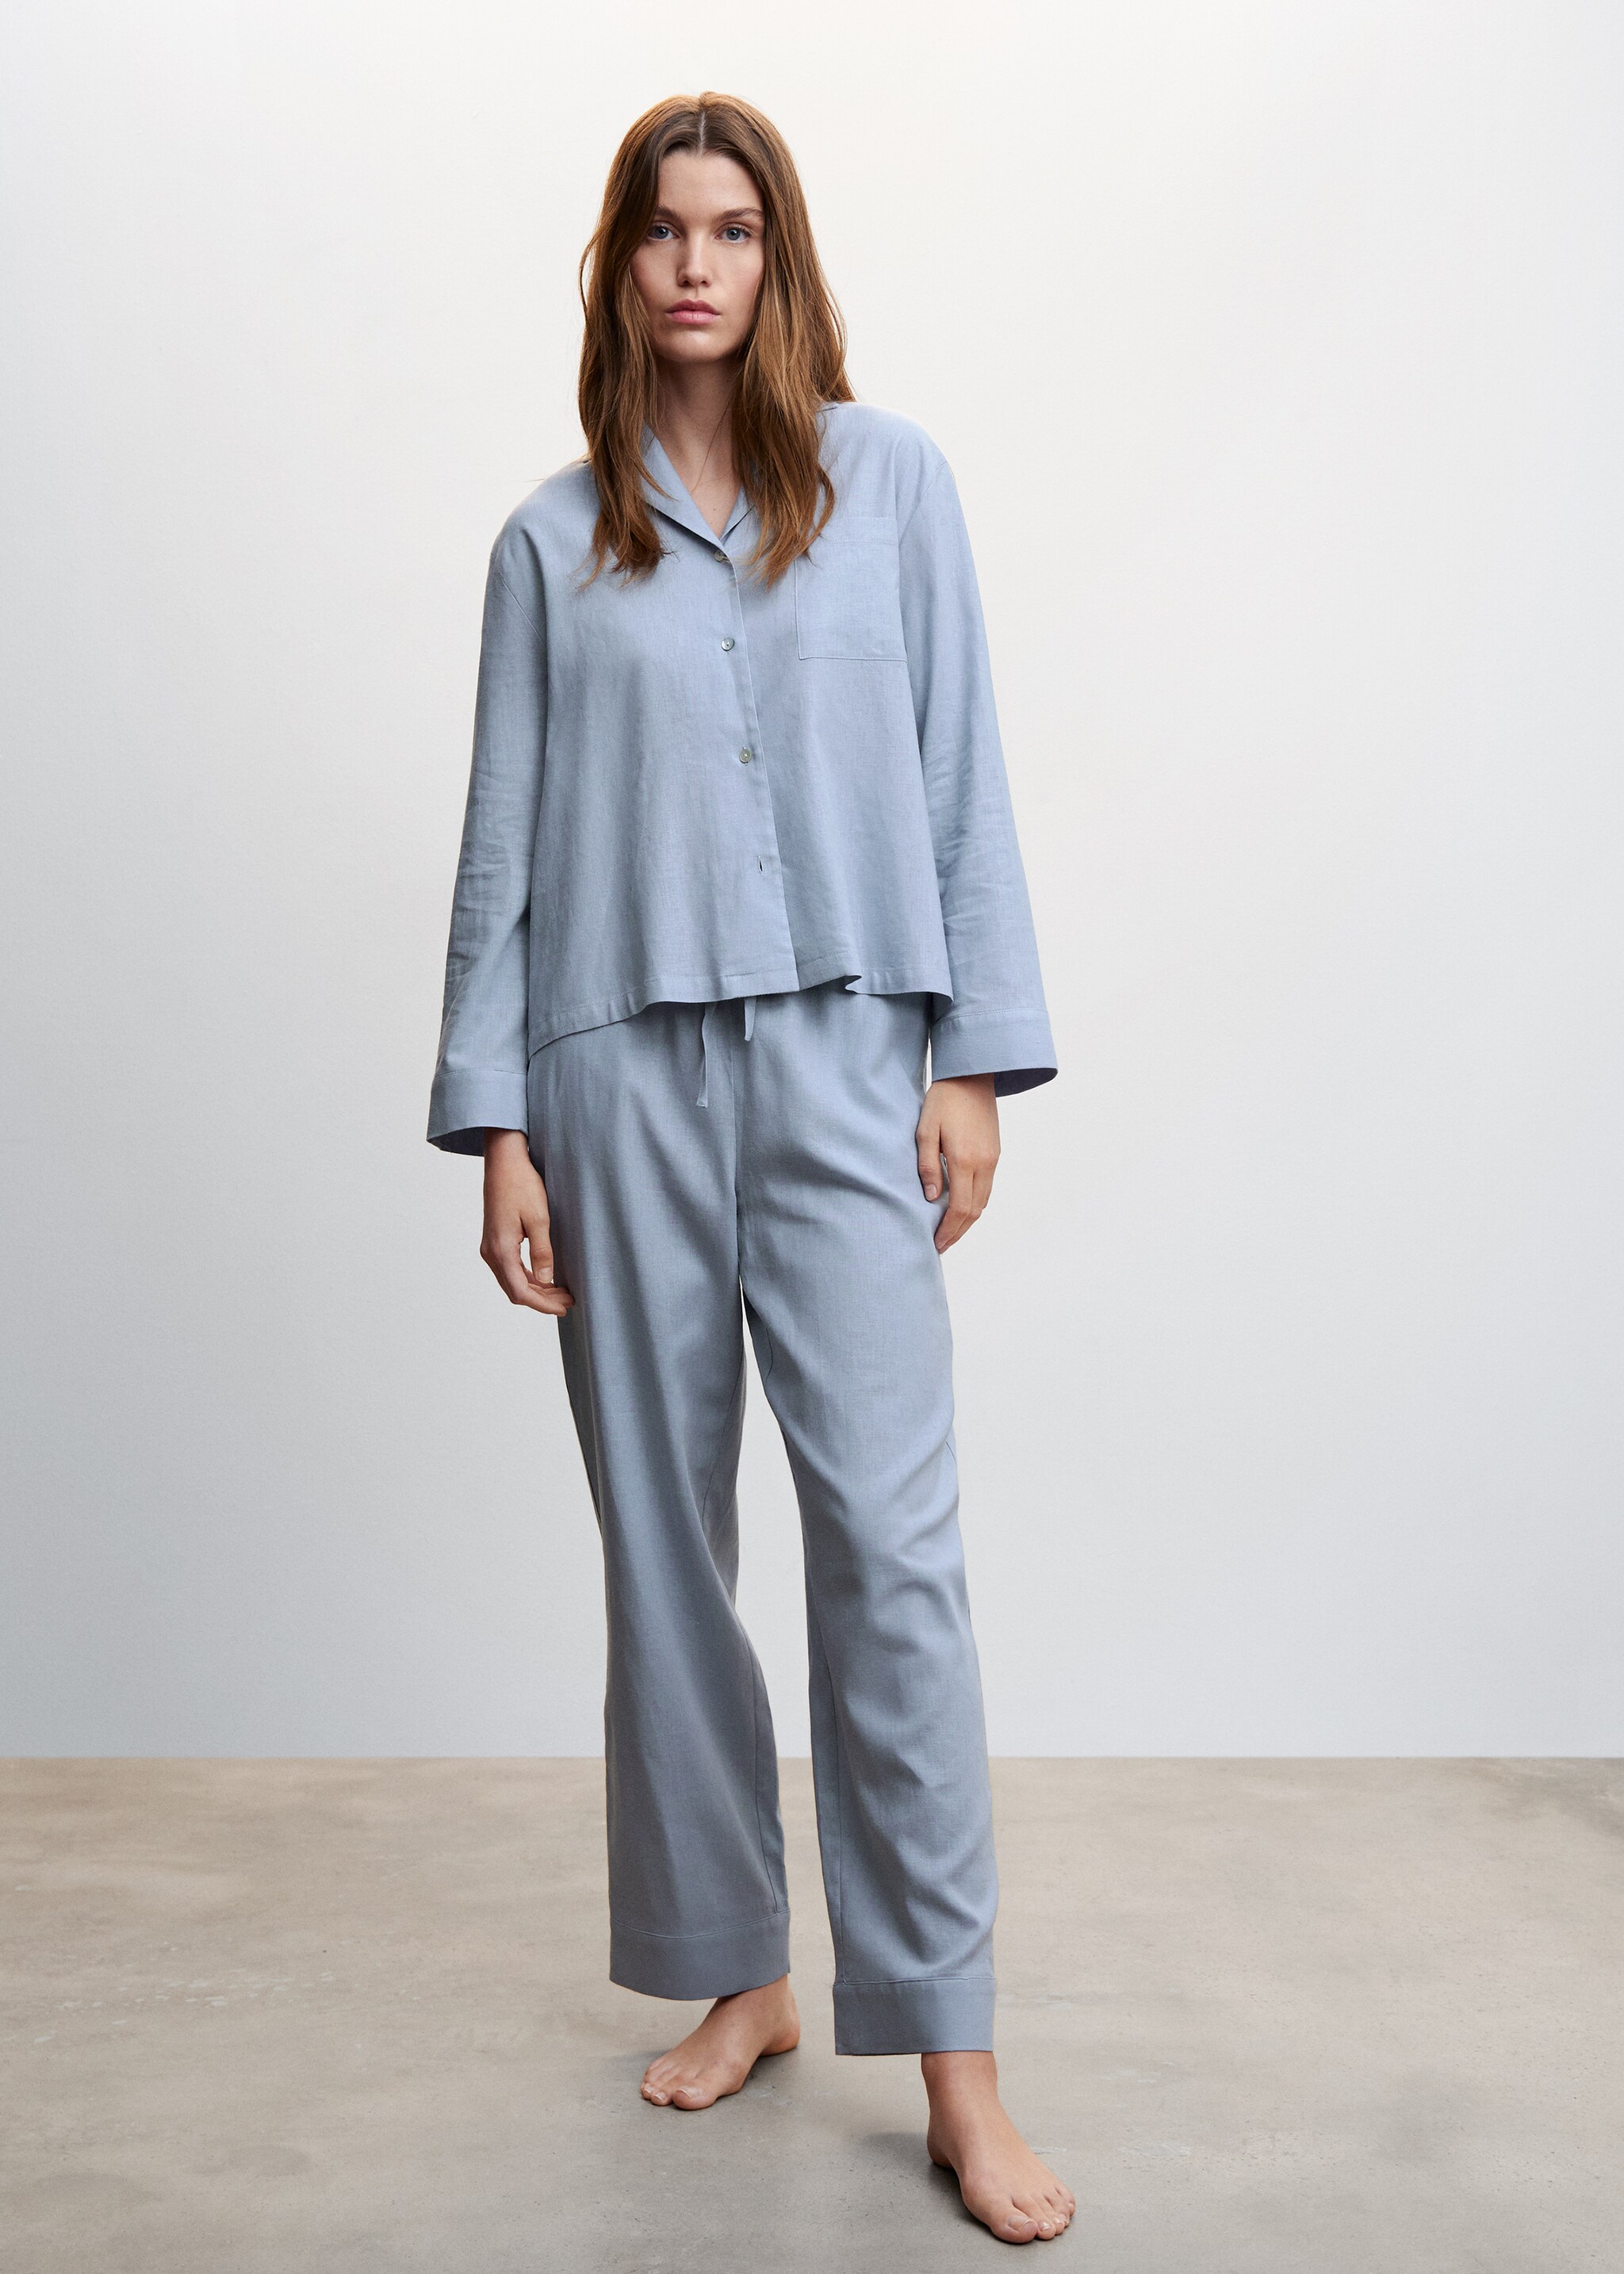 Camisa pijama lino - Plano general